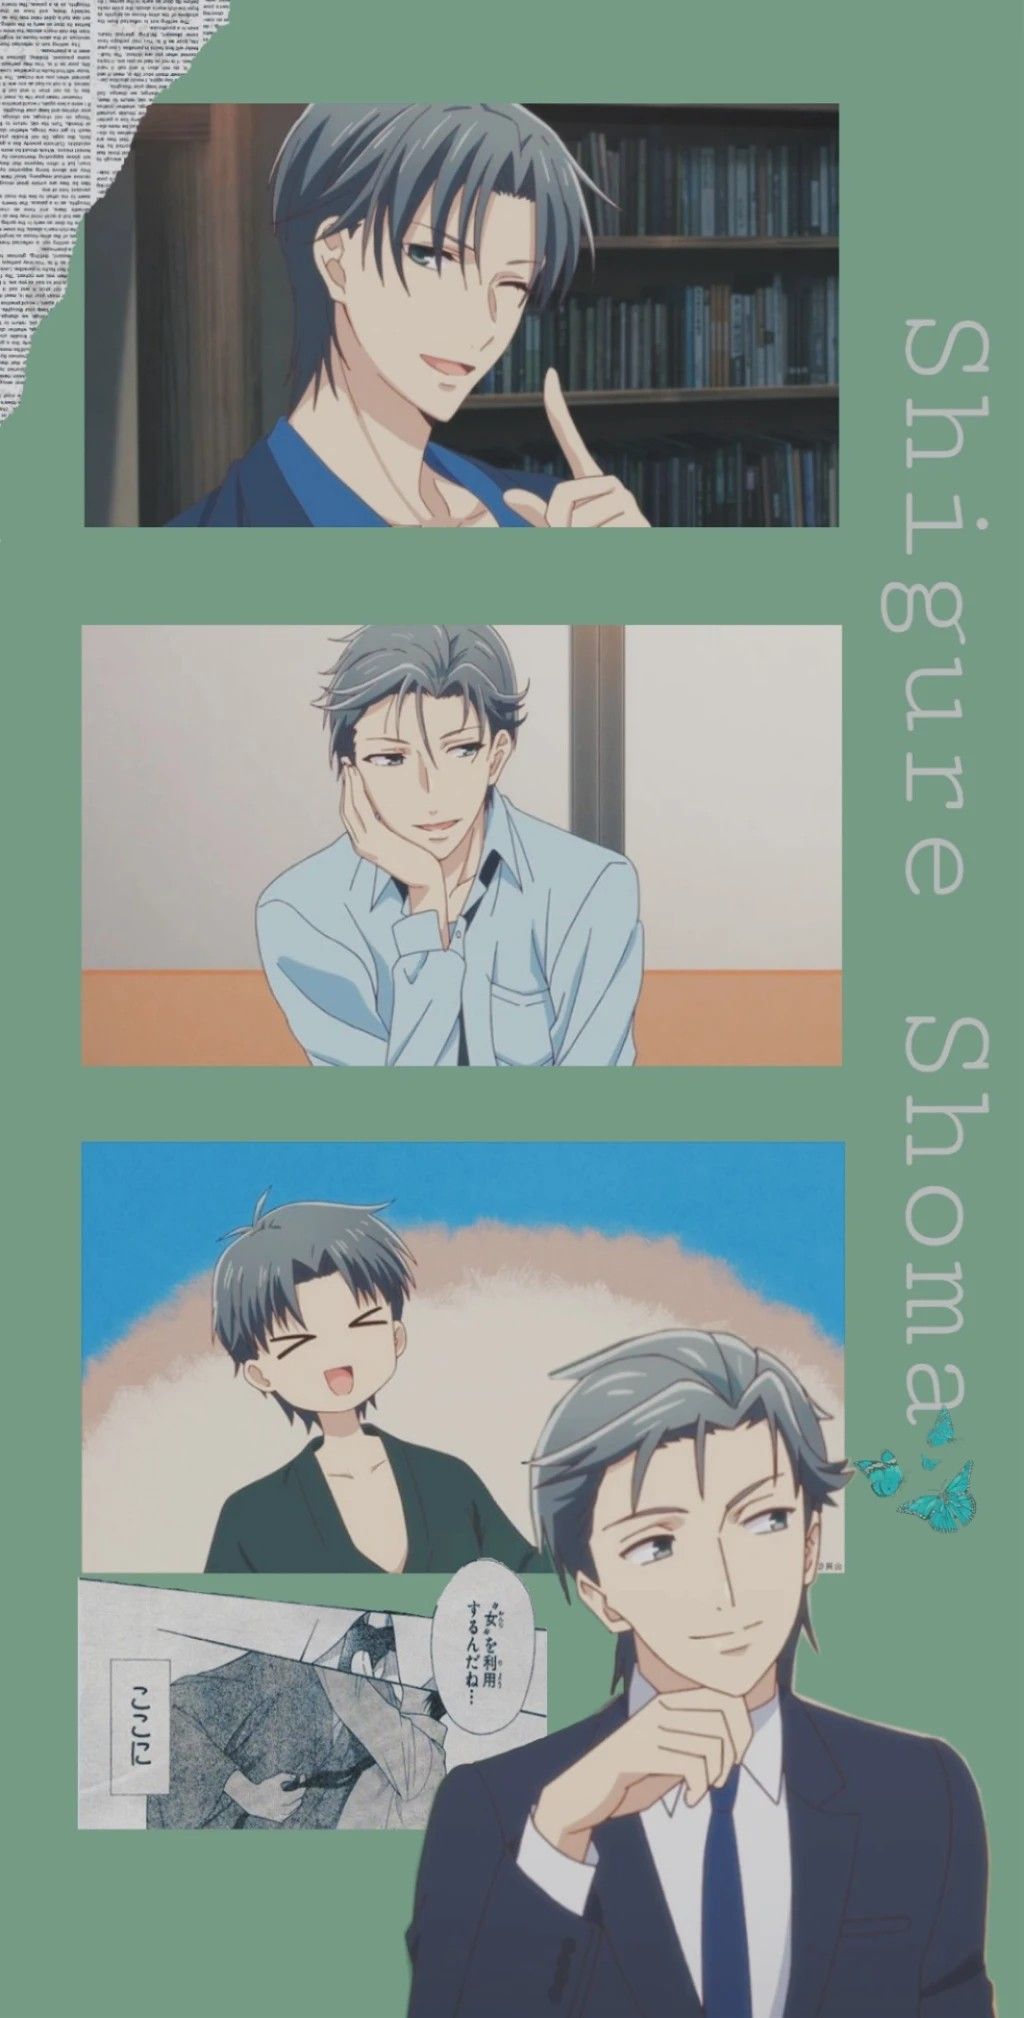 Shigure Shoma wallpaper. Anime, Anime wallpaper, Aesthetic anime